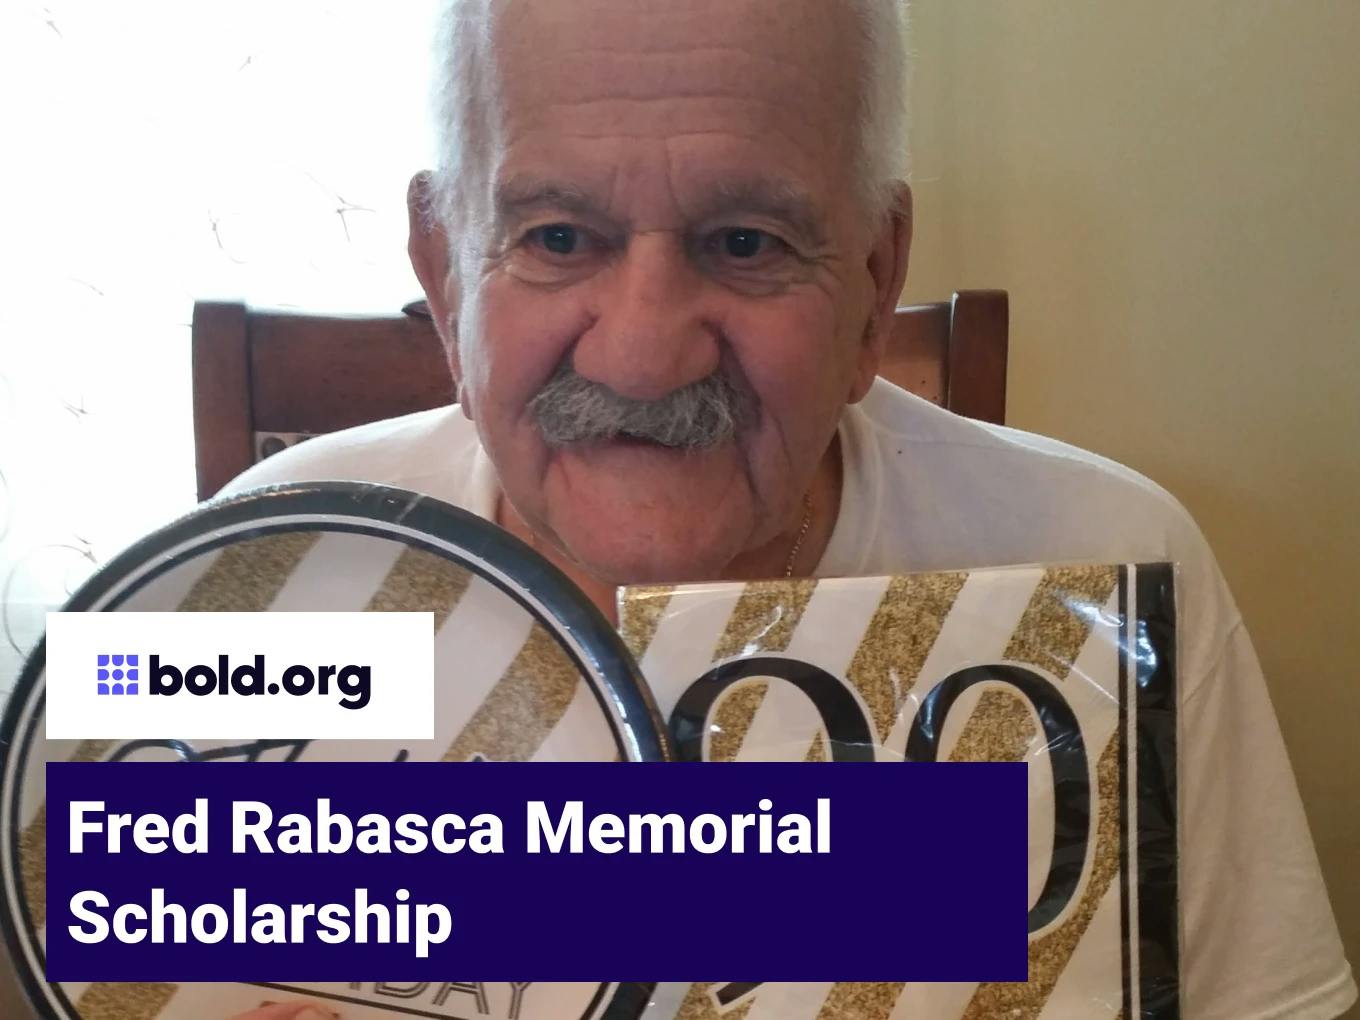 Fred Rabasca Memorial Scholarship